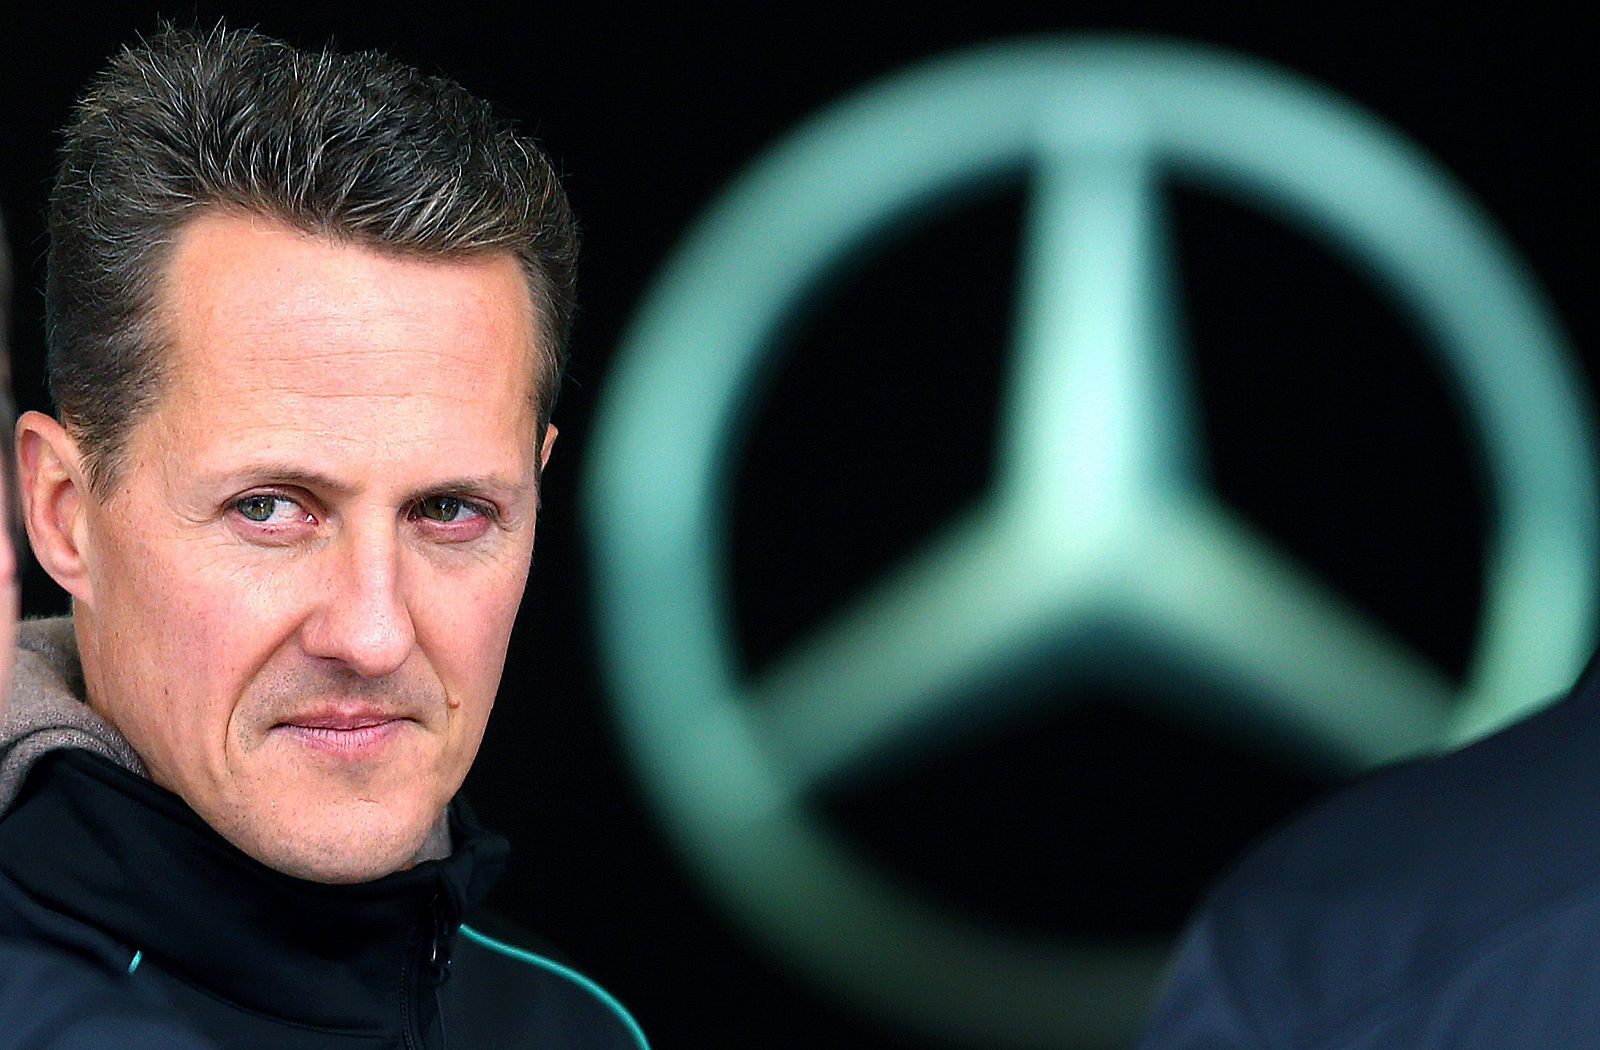 Michael Schumacher, piloto alemán heptacampeón de Fórmula 1